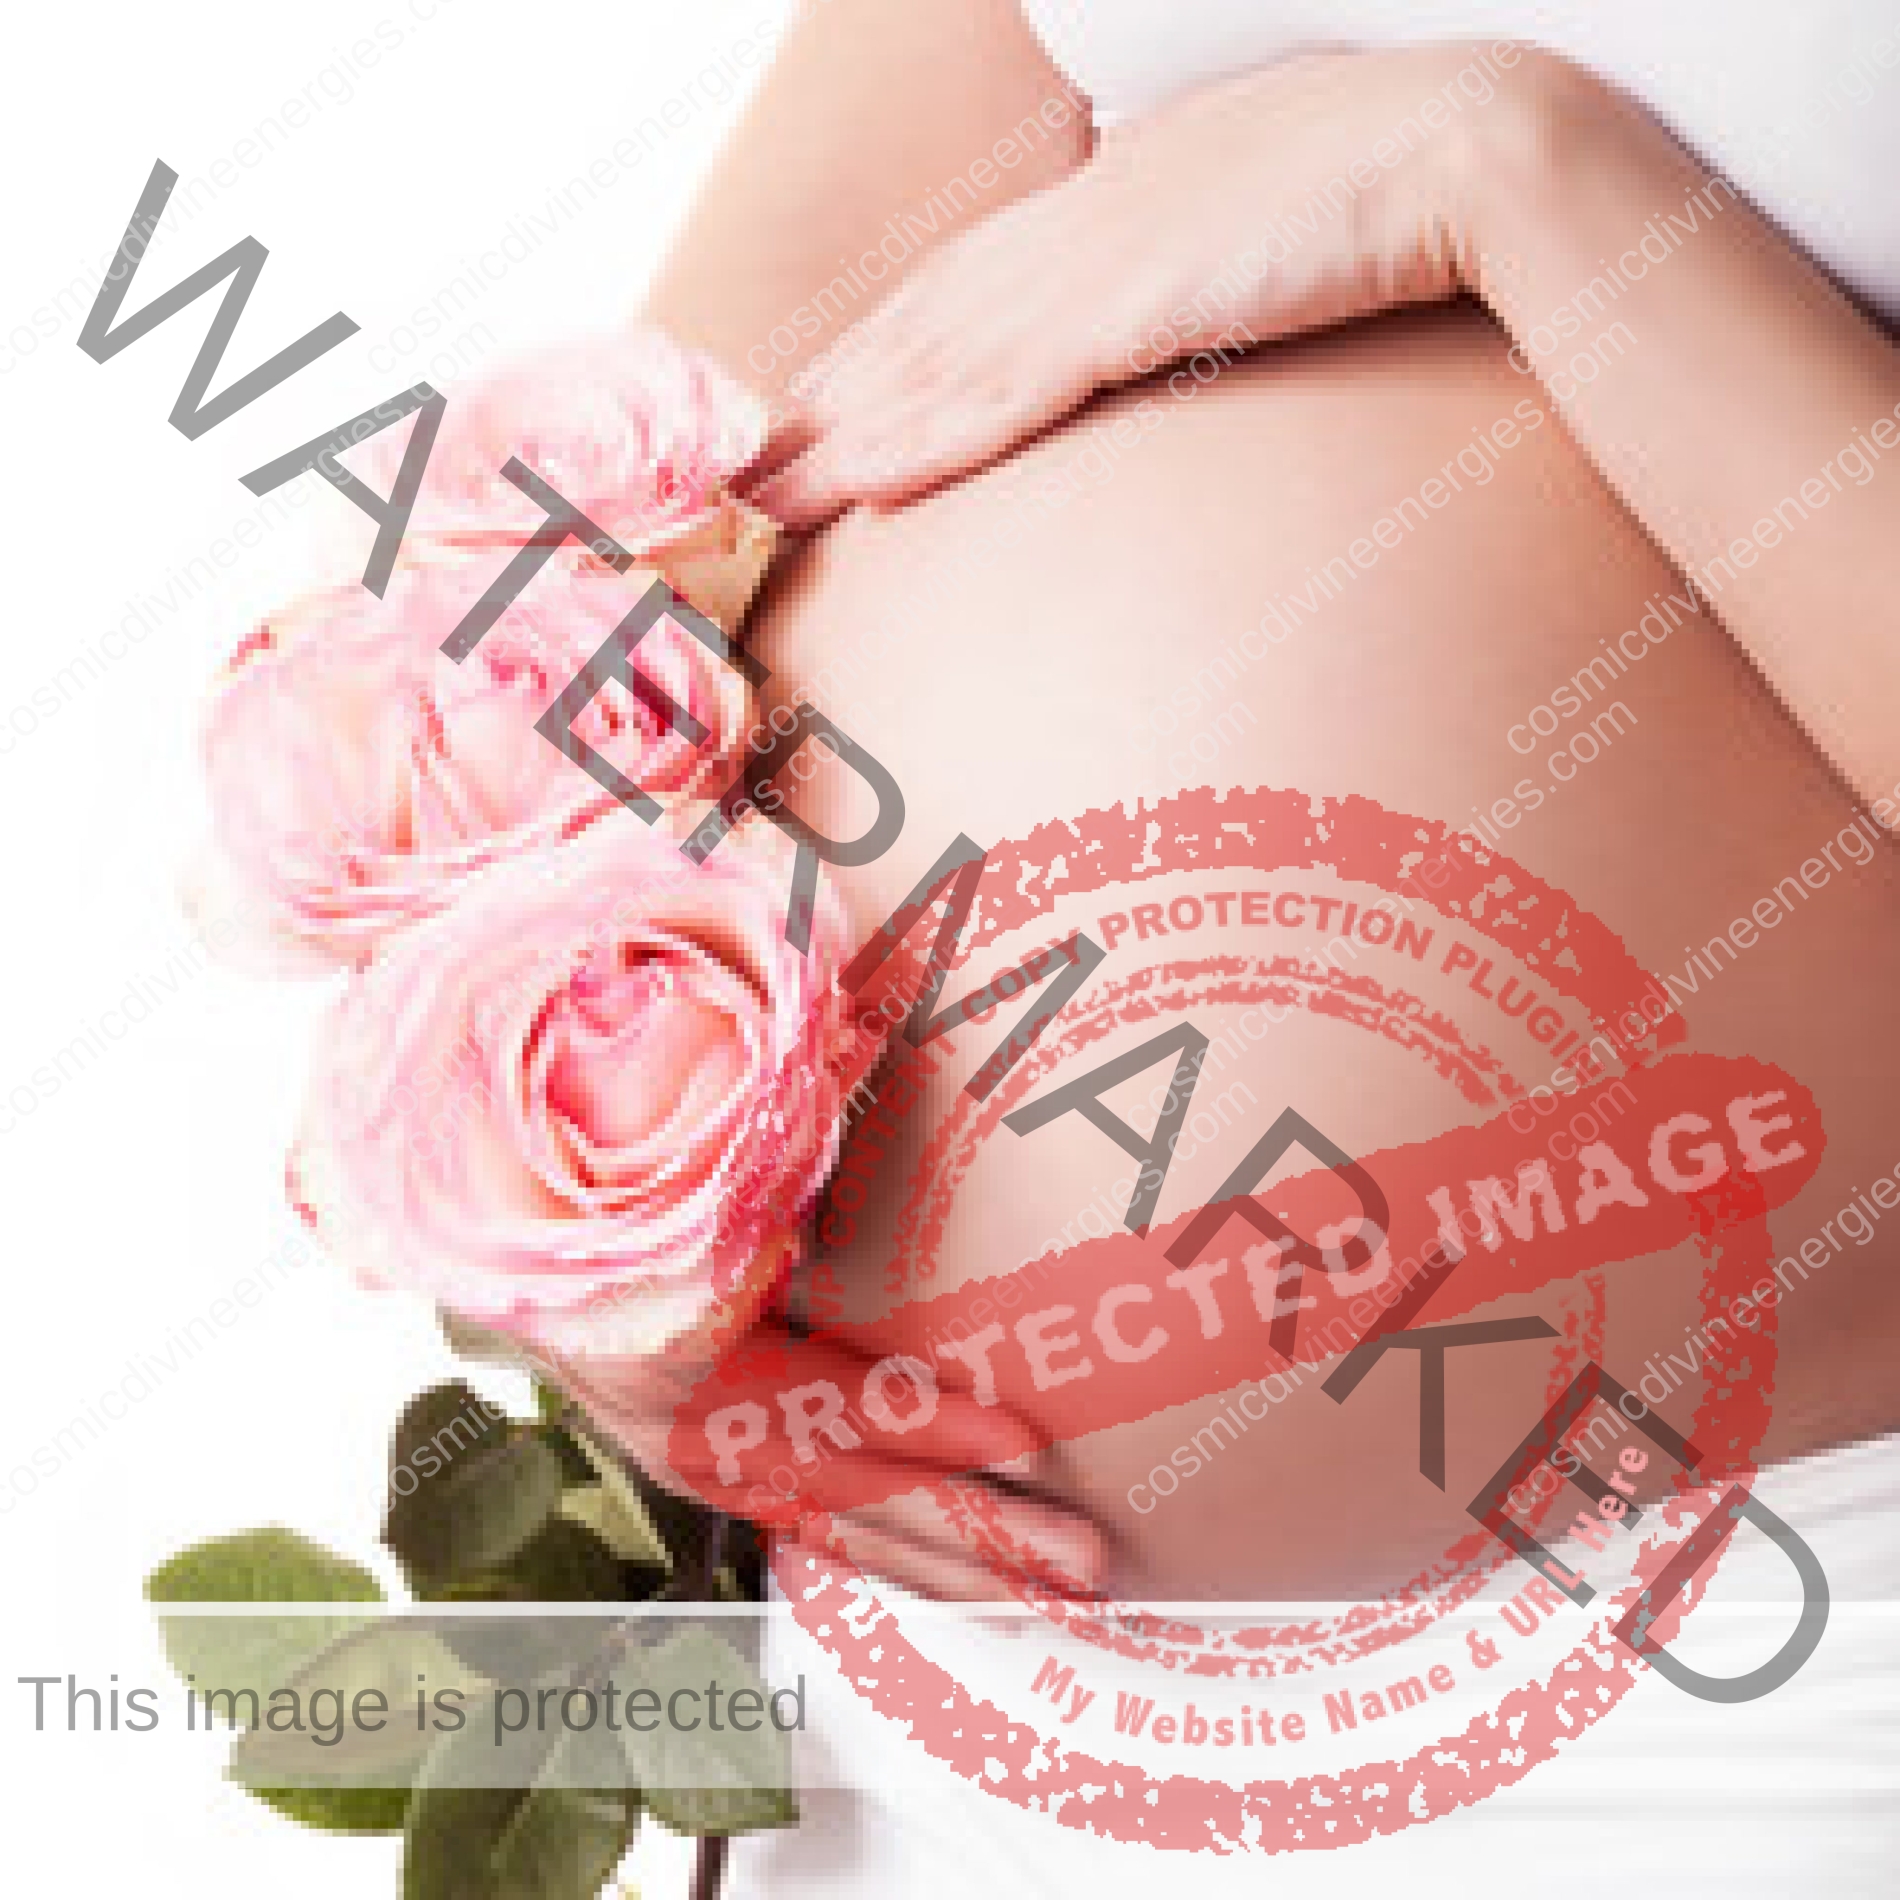 Pregnancy Care Reiki